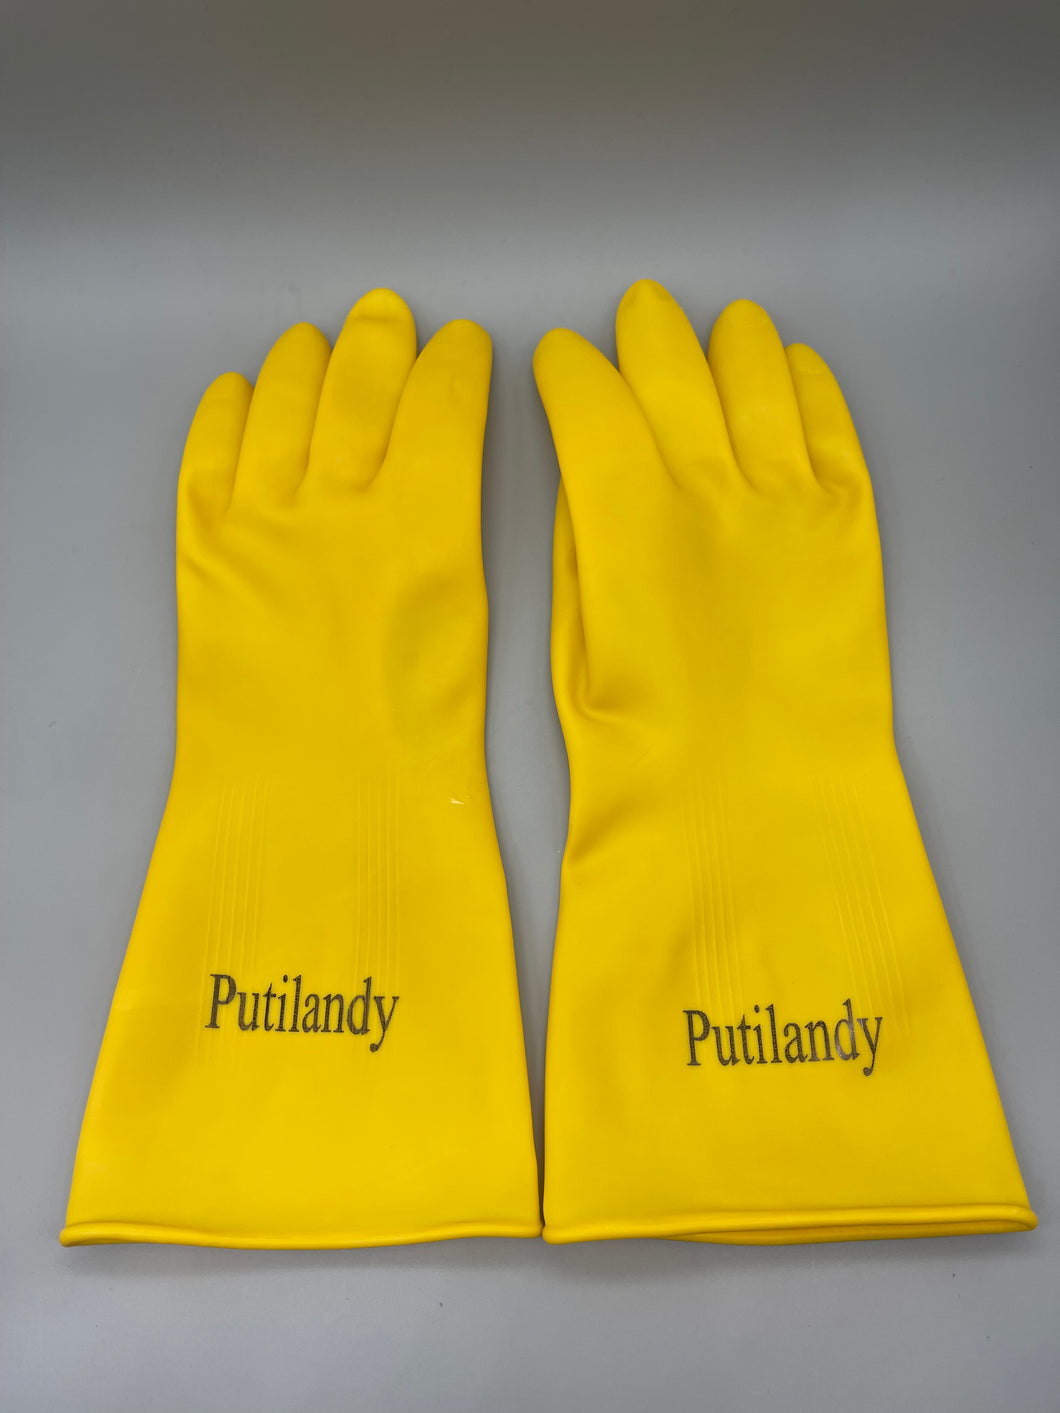 Putilandy Kitchen mitts ,Reusable Dishwashing Gloves, Cleaning, Kitchen Gloves, Dish Wash,Unlined, Latex Free, Yellow, Medium